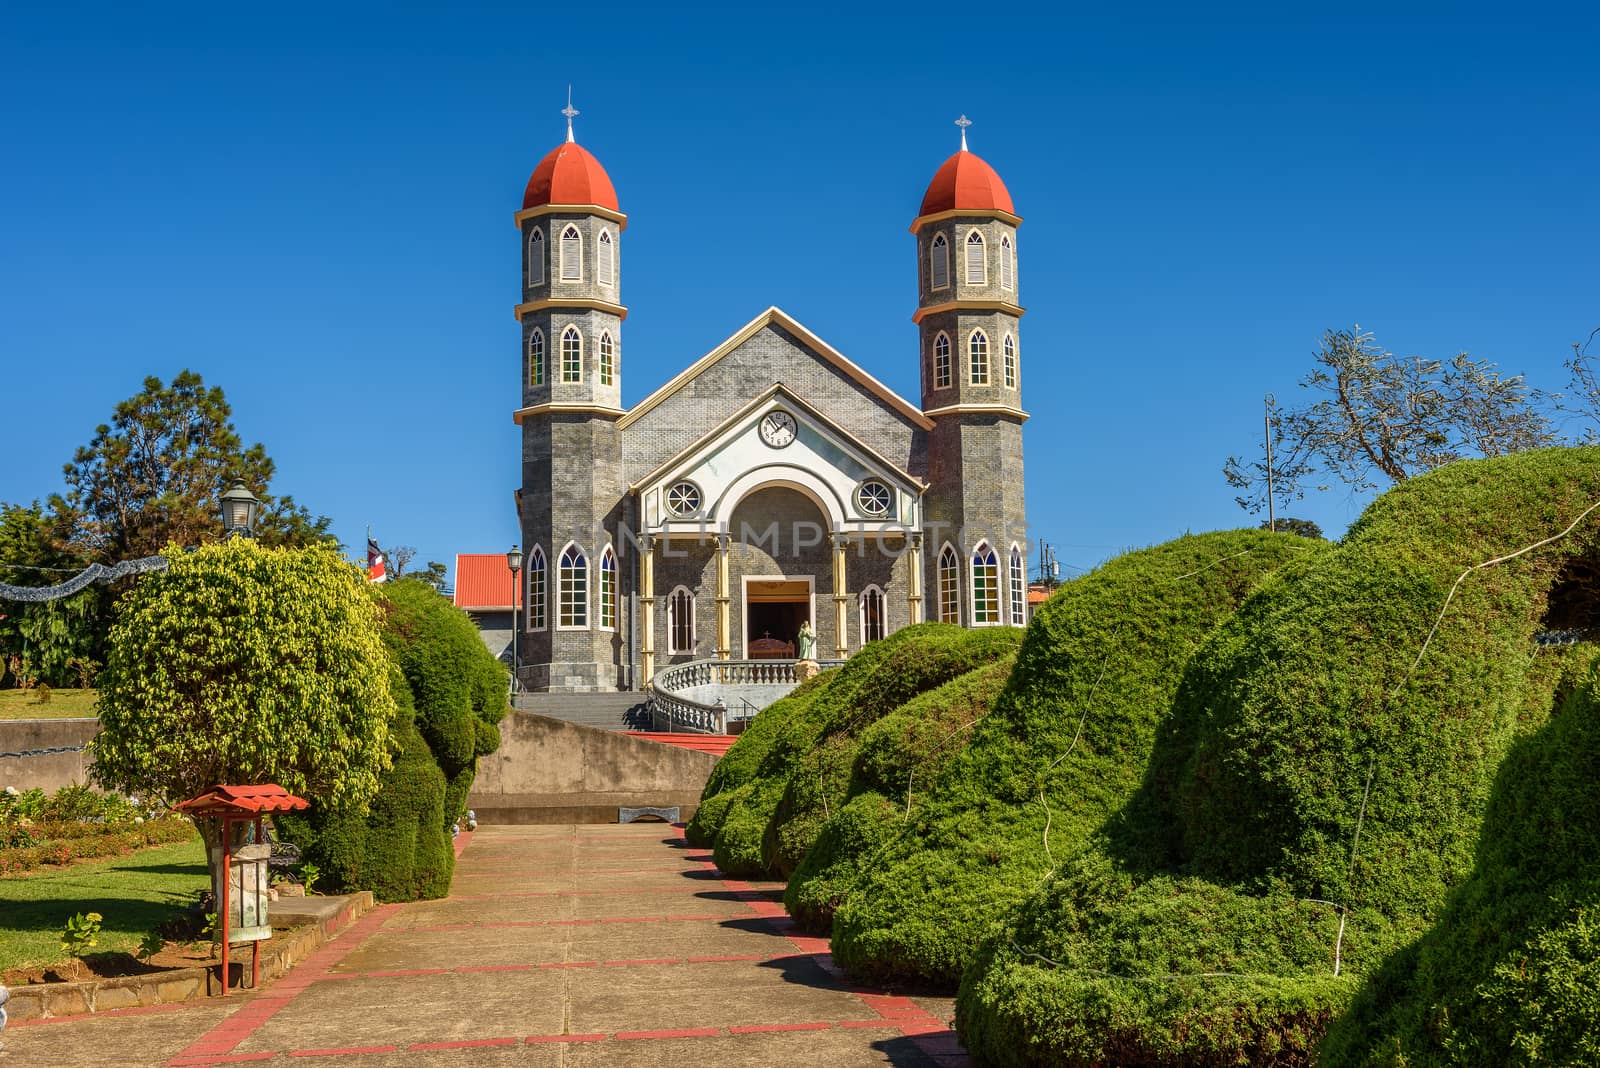 Catholic church with a park in Zarcero, Costa Rica by nickfox